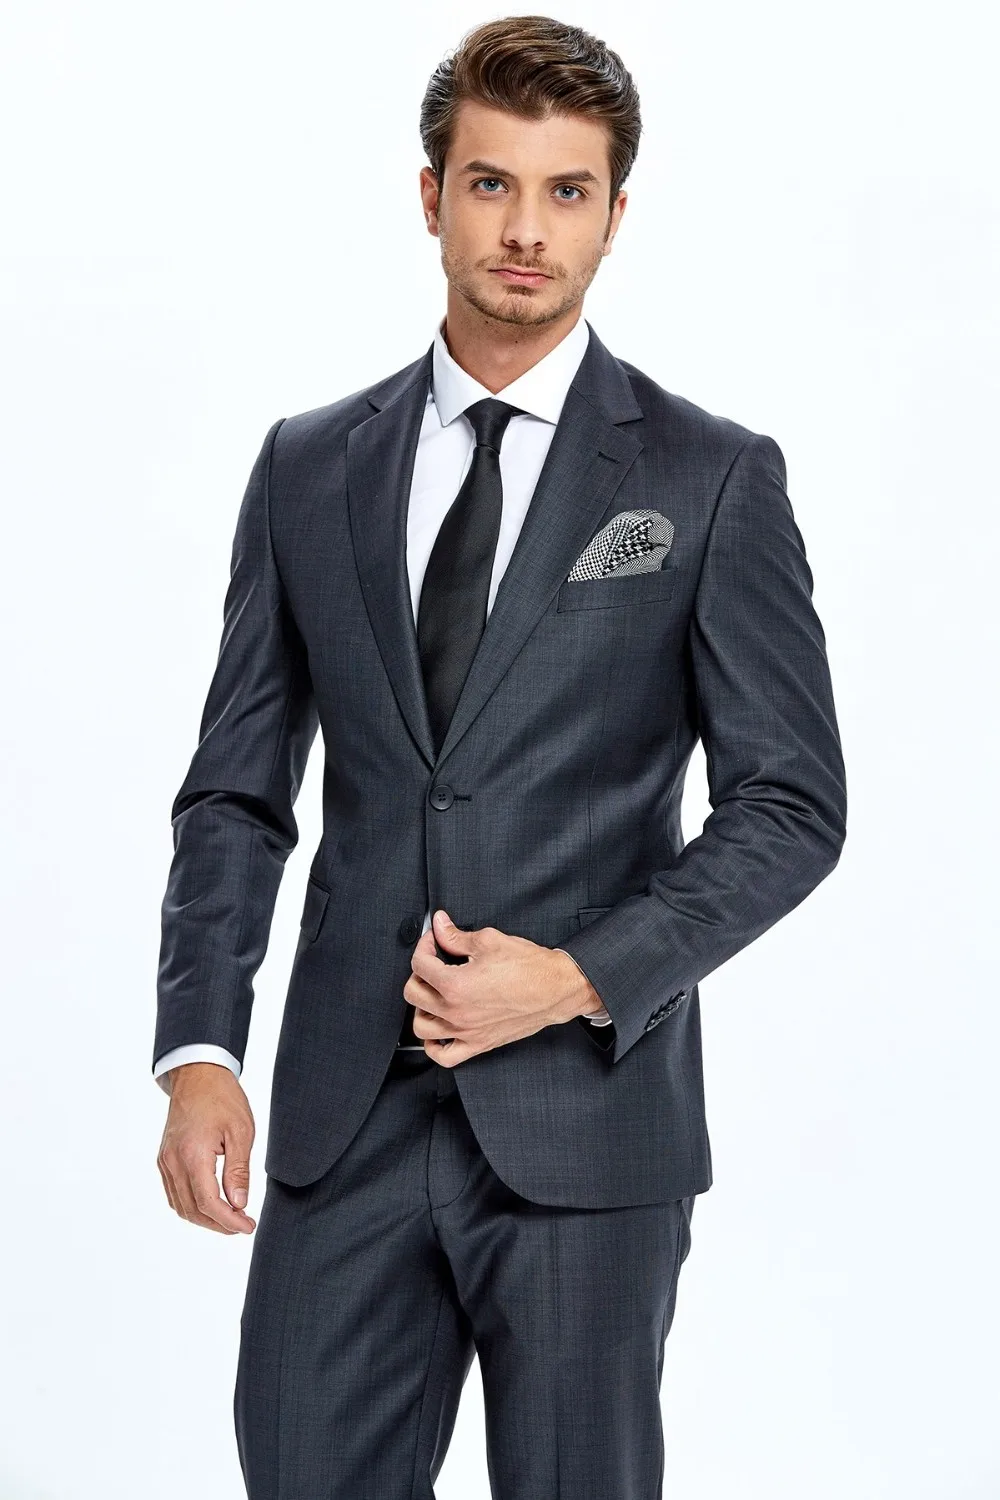 Mens Woolen Suits High Quality Made In Turkey - Buy Wedding Best Man ...